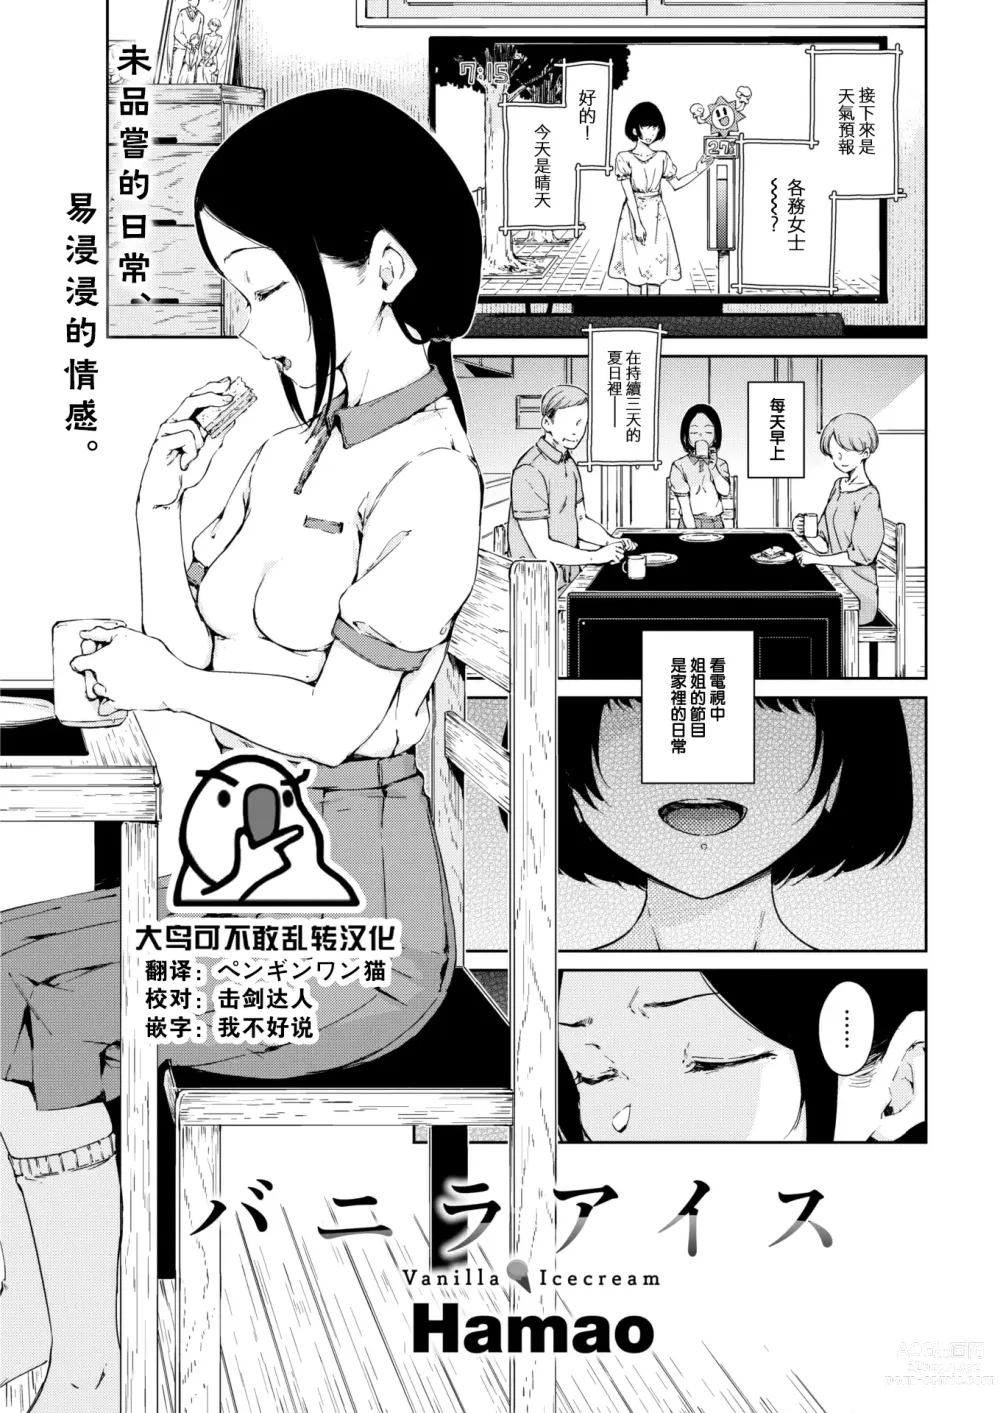 Page 1 of manga Vanilla Ice